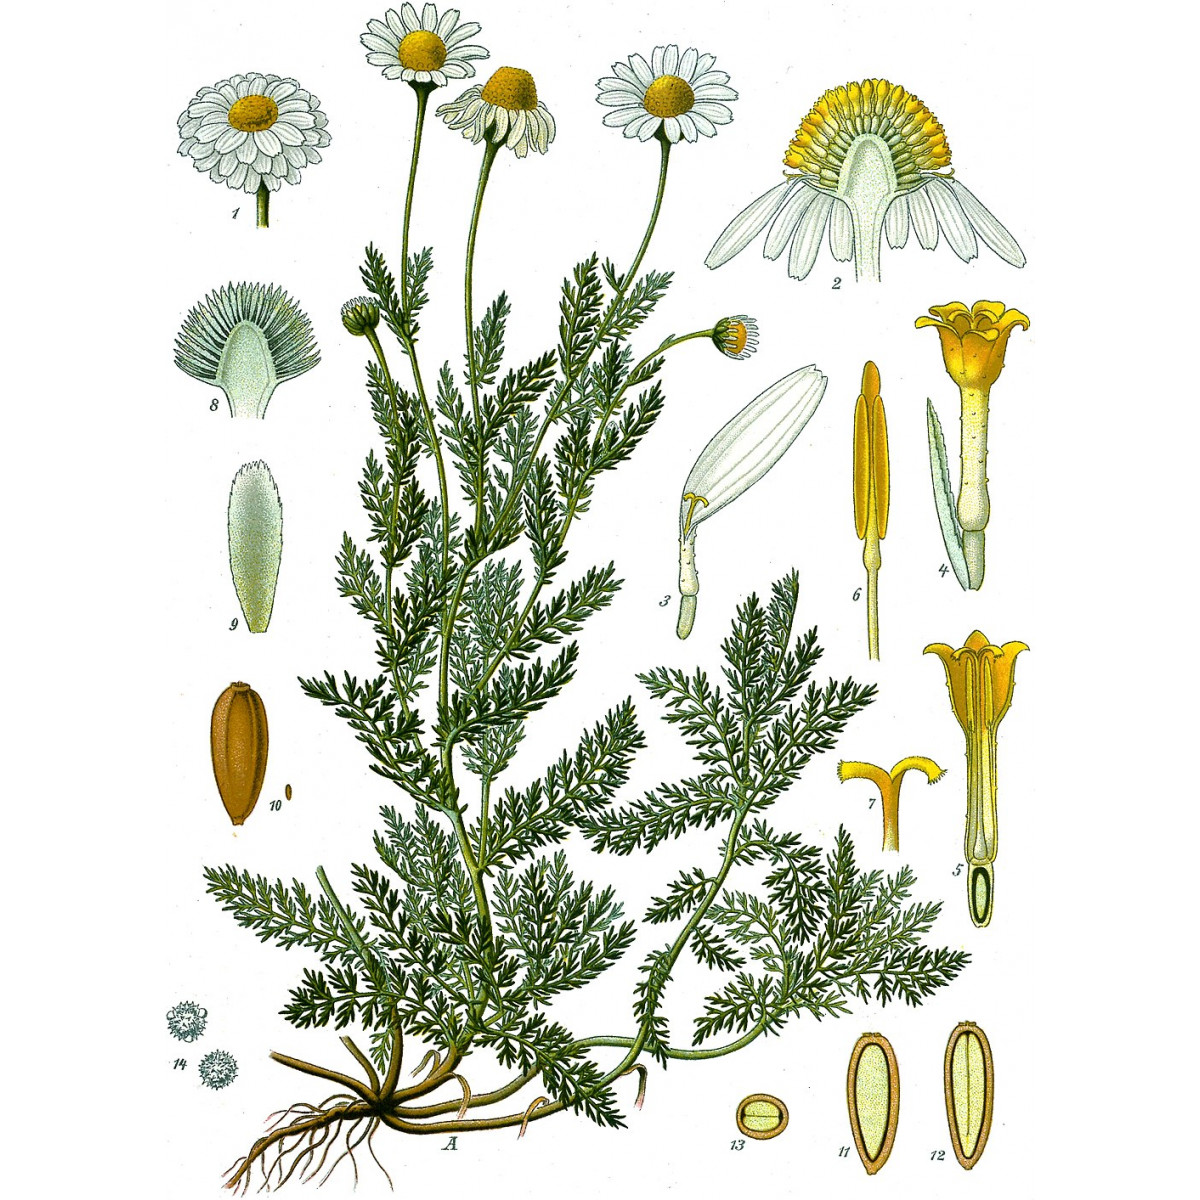 Camomille, fleur bio - Herbes Orford